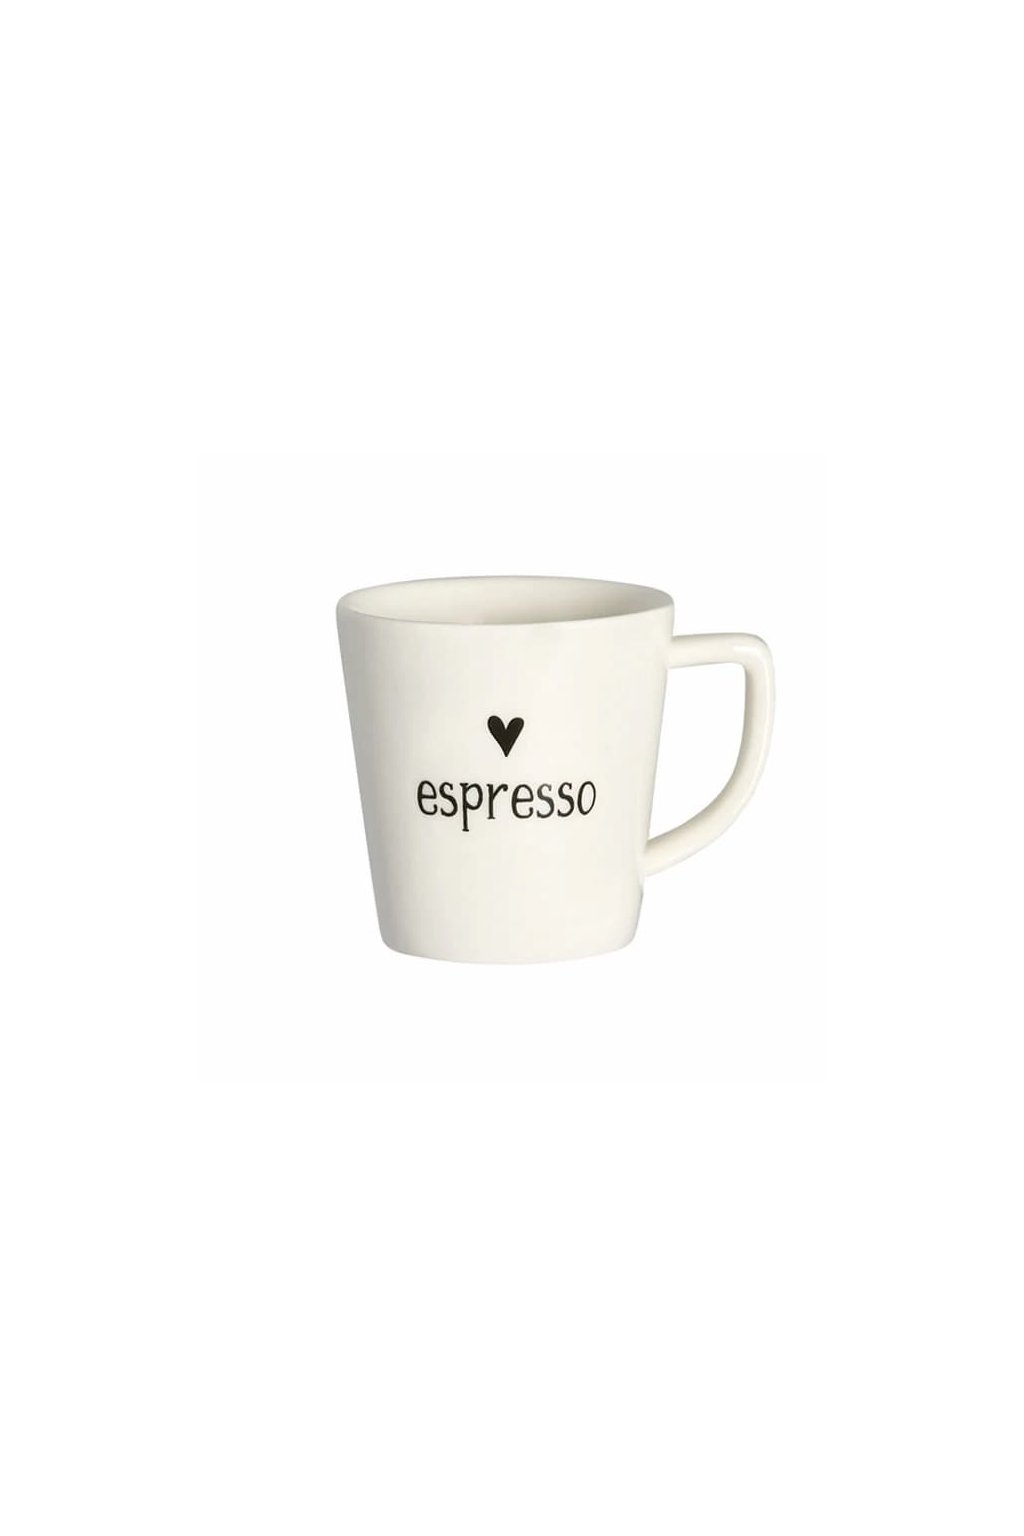 espresso šálky biela porcelán